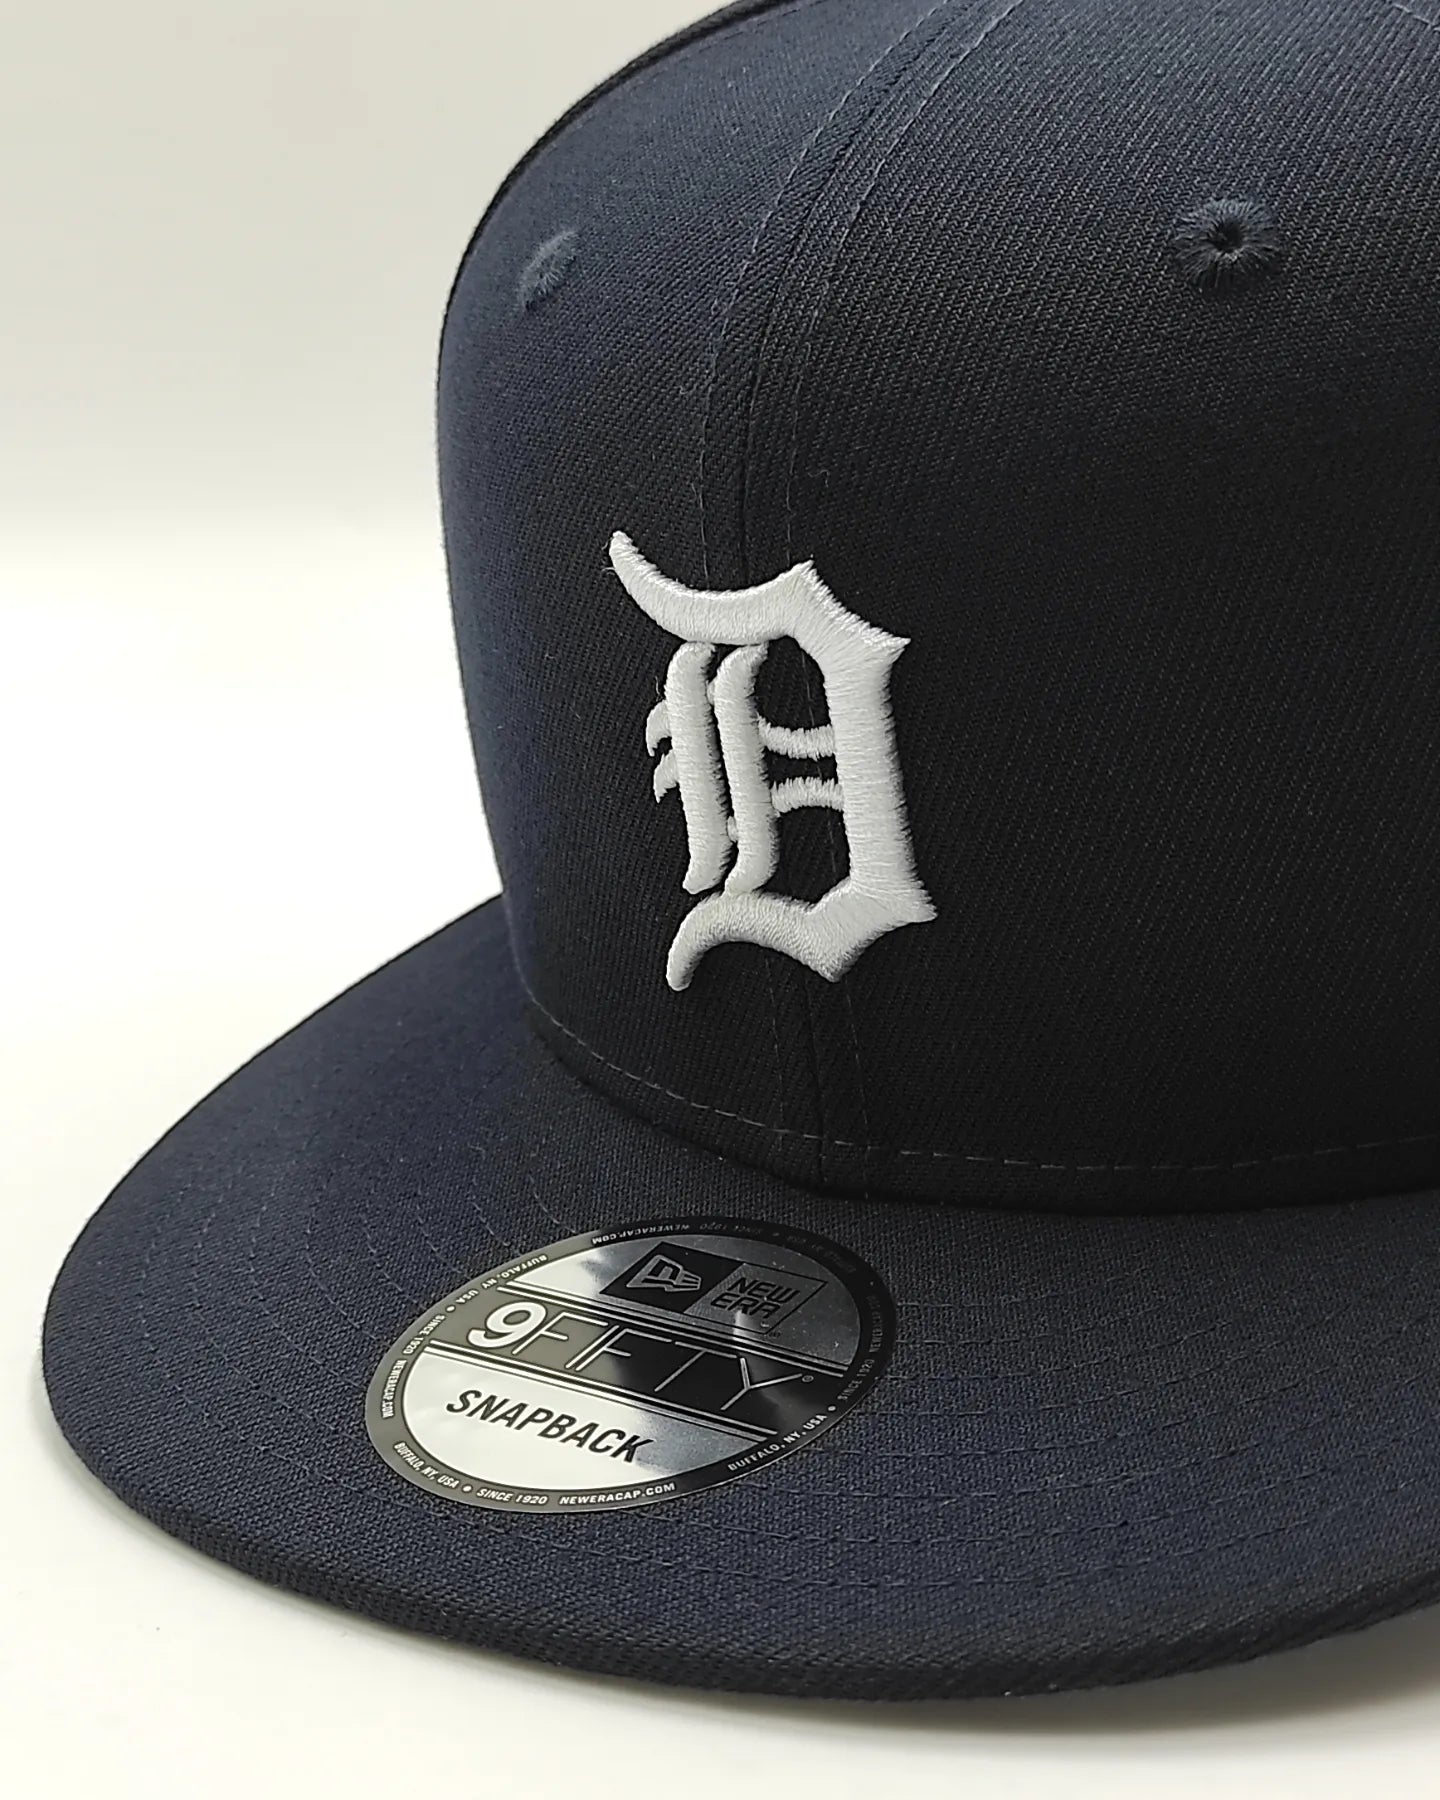 Detroit Tigers New Era 9Fifty SnapBack Adjustable Hat Black Color